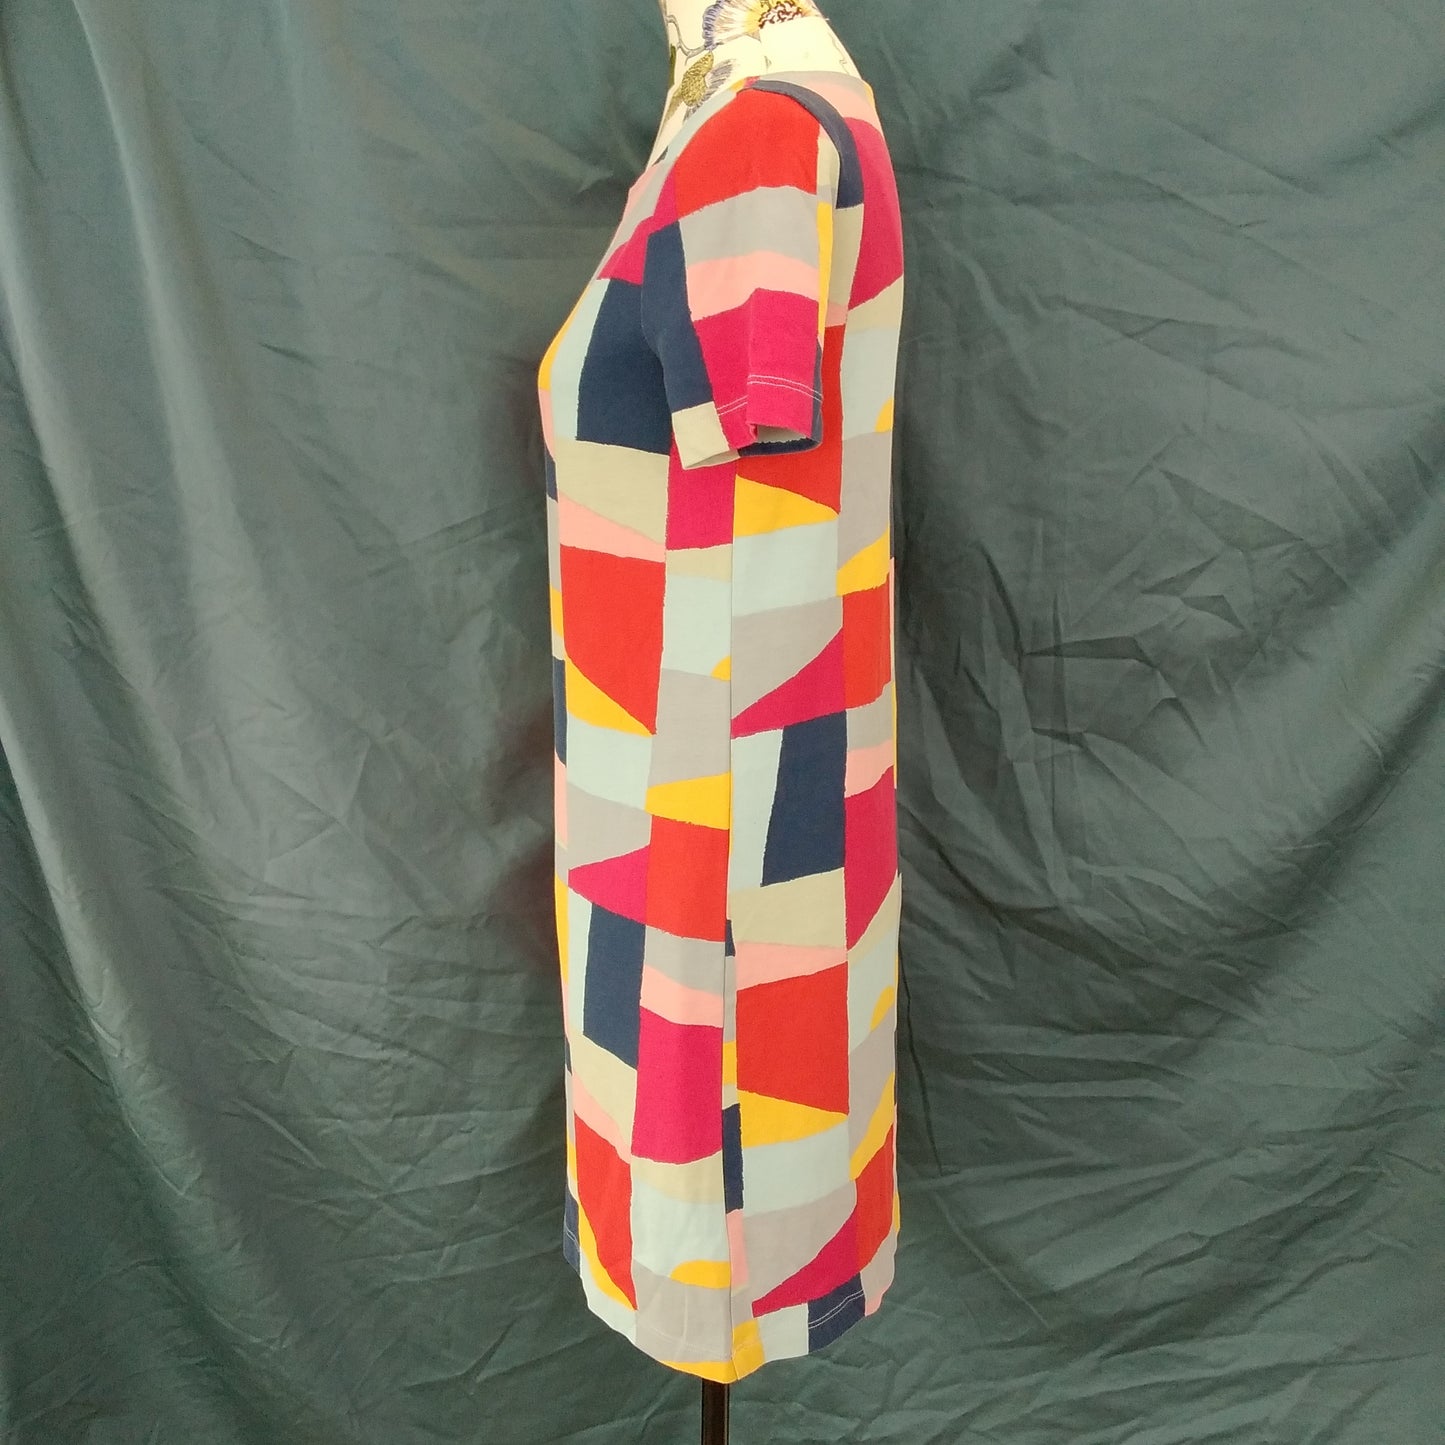 TORY BURCH multicolored 100% Pima Cotton Short Sleeve Dress - Small